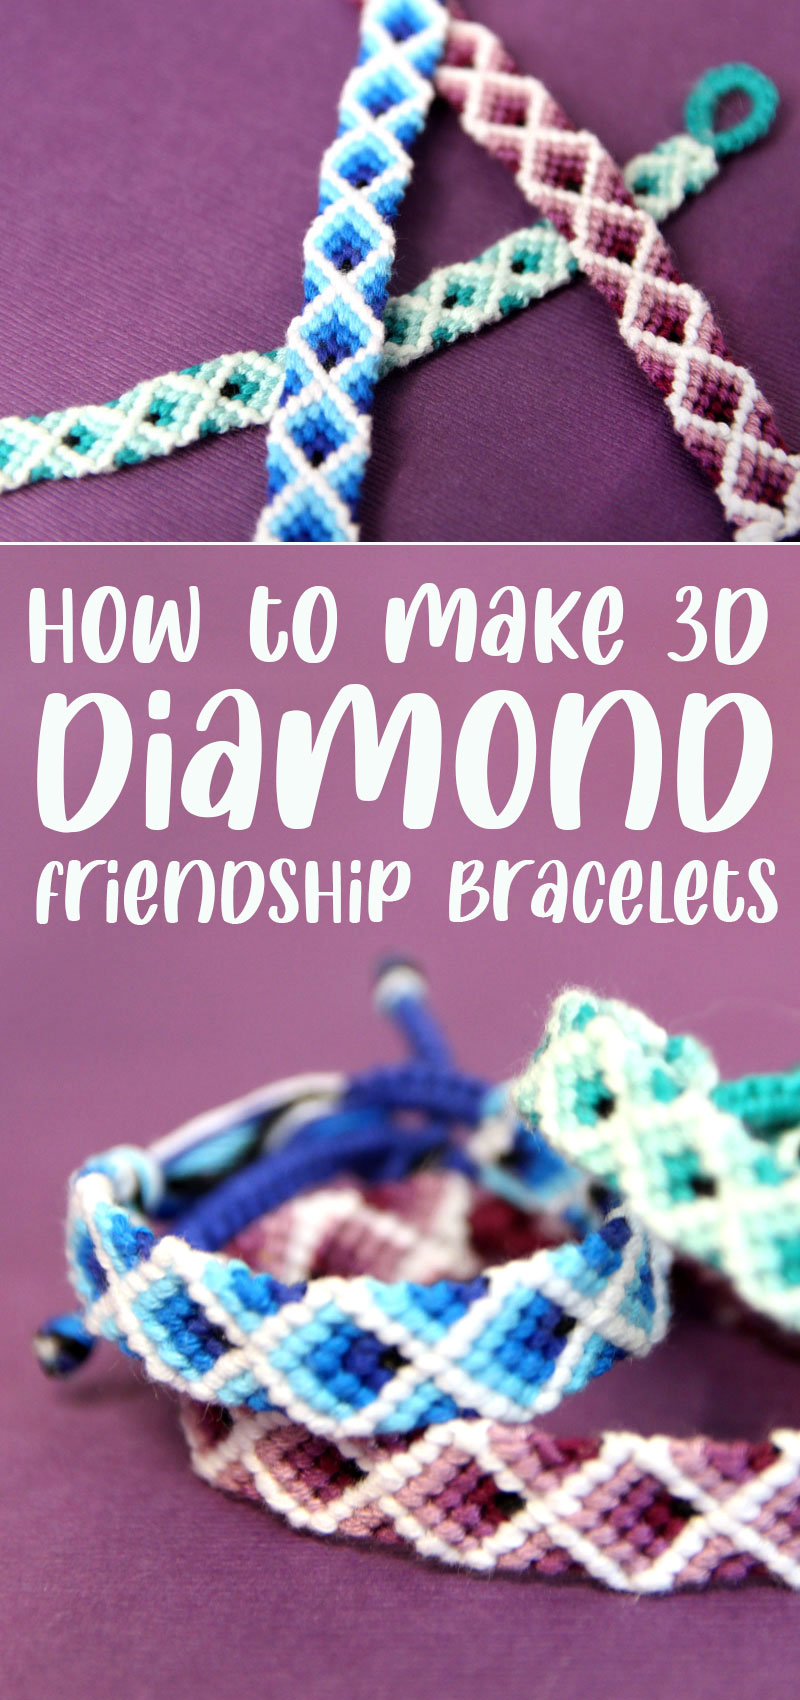 Simple Diamond Friendship Bracelet Tutorial [CC] - YouTube